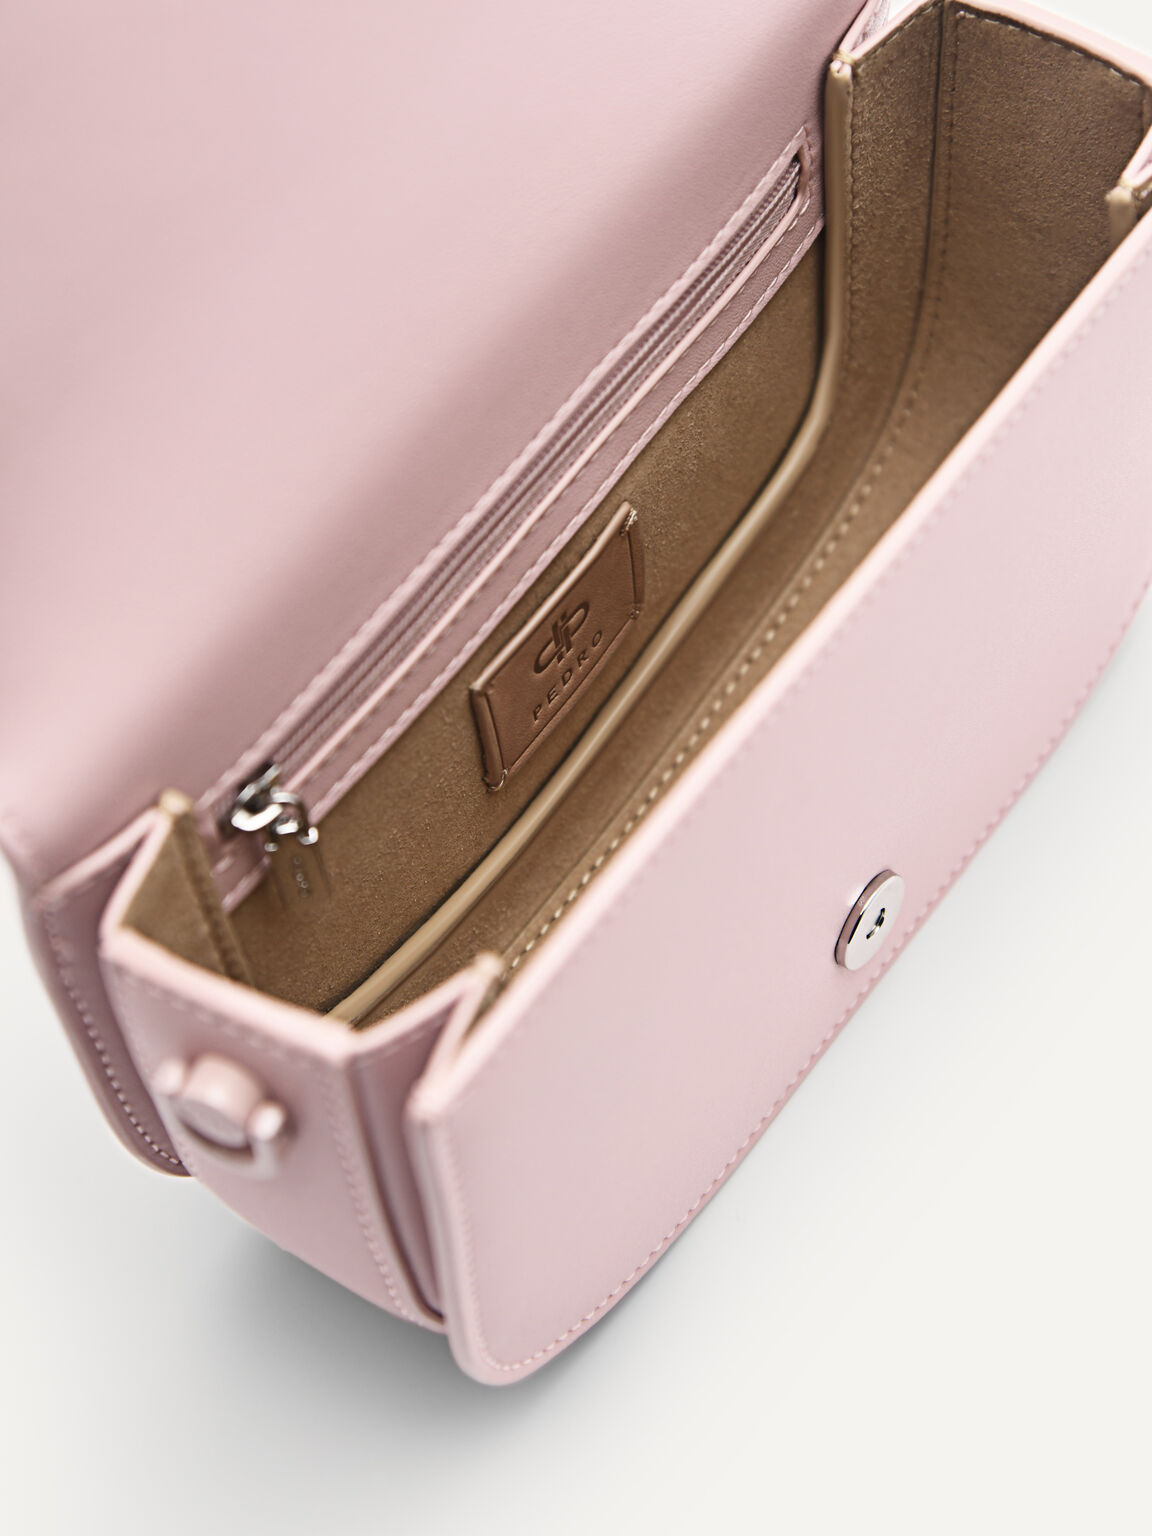 PEDRO Icon Leather Shoulder Bag, Pink